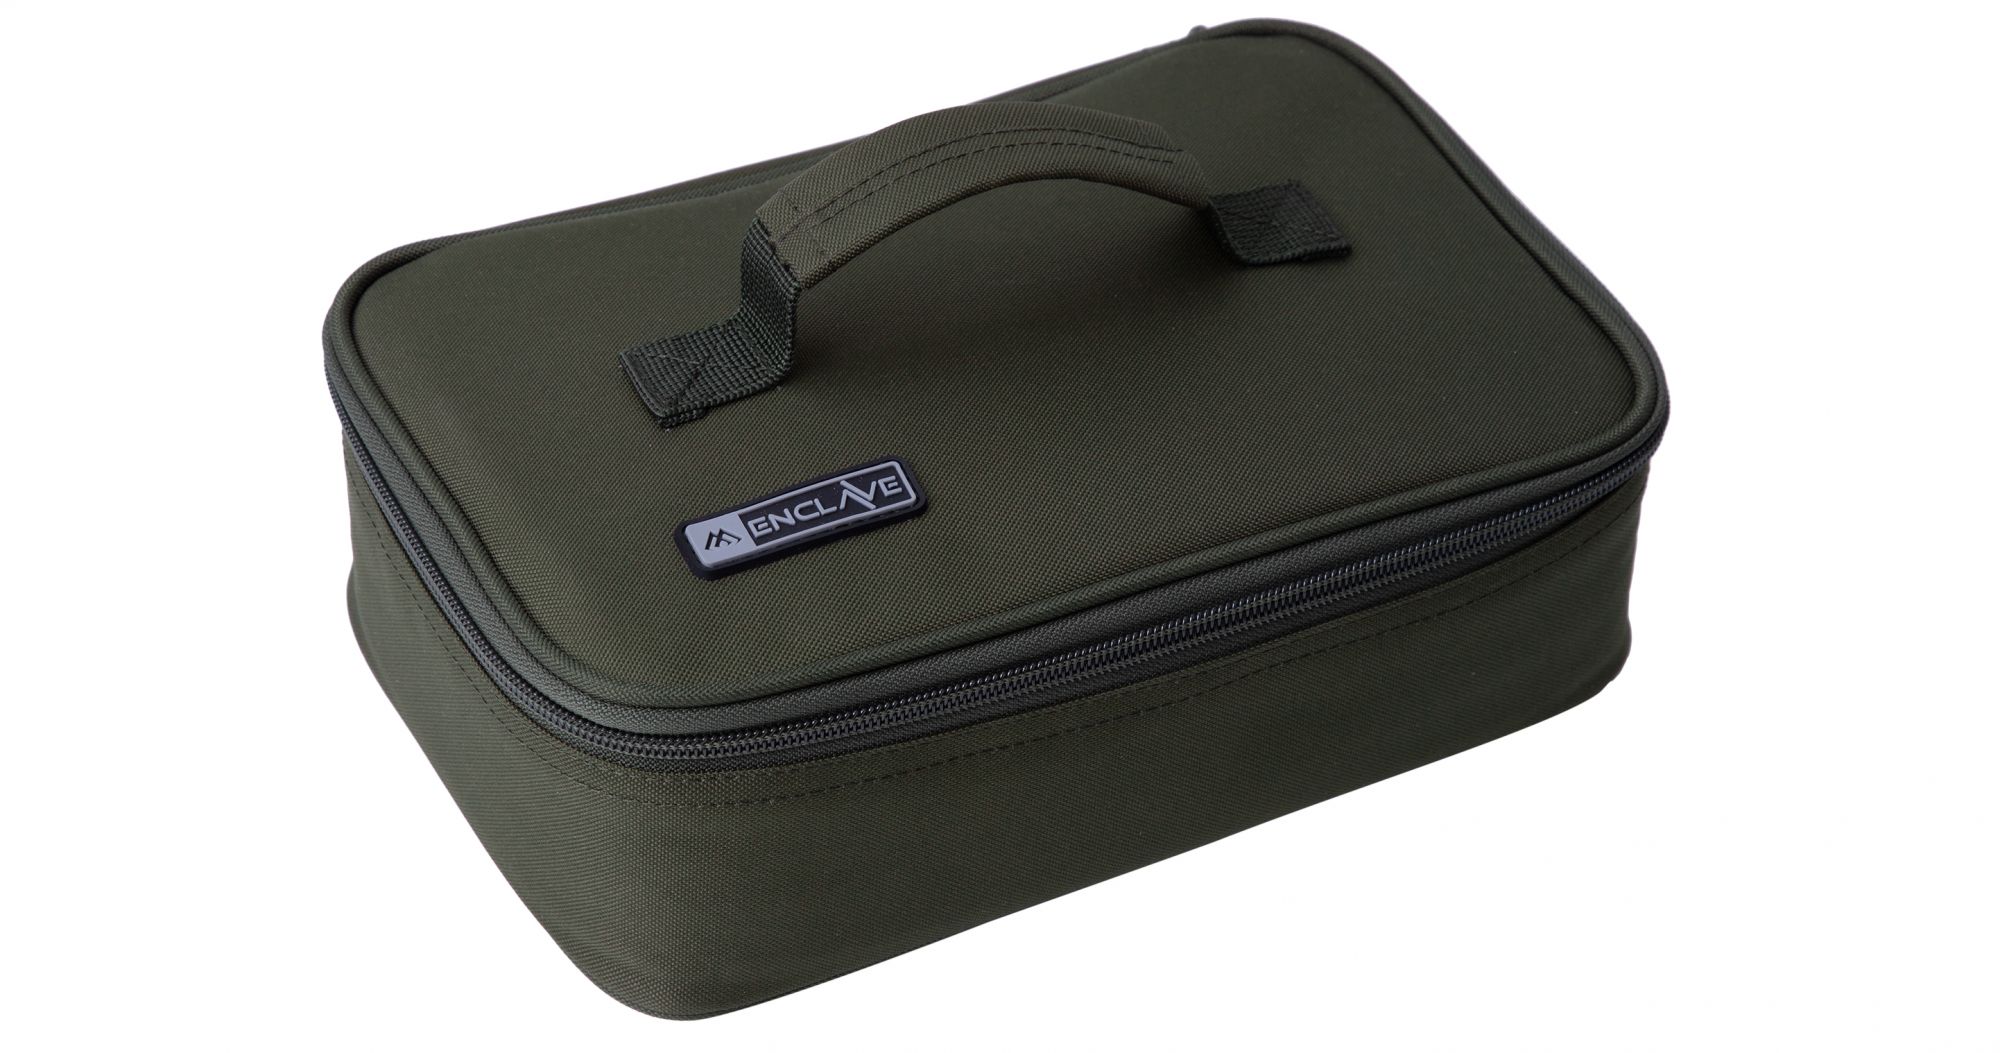 Mikado Bag Enclave For Accessories S